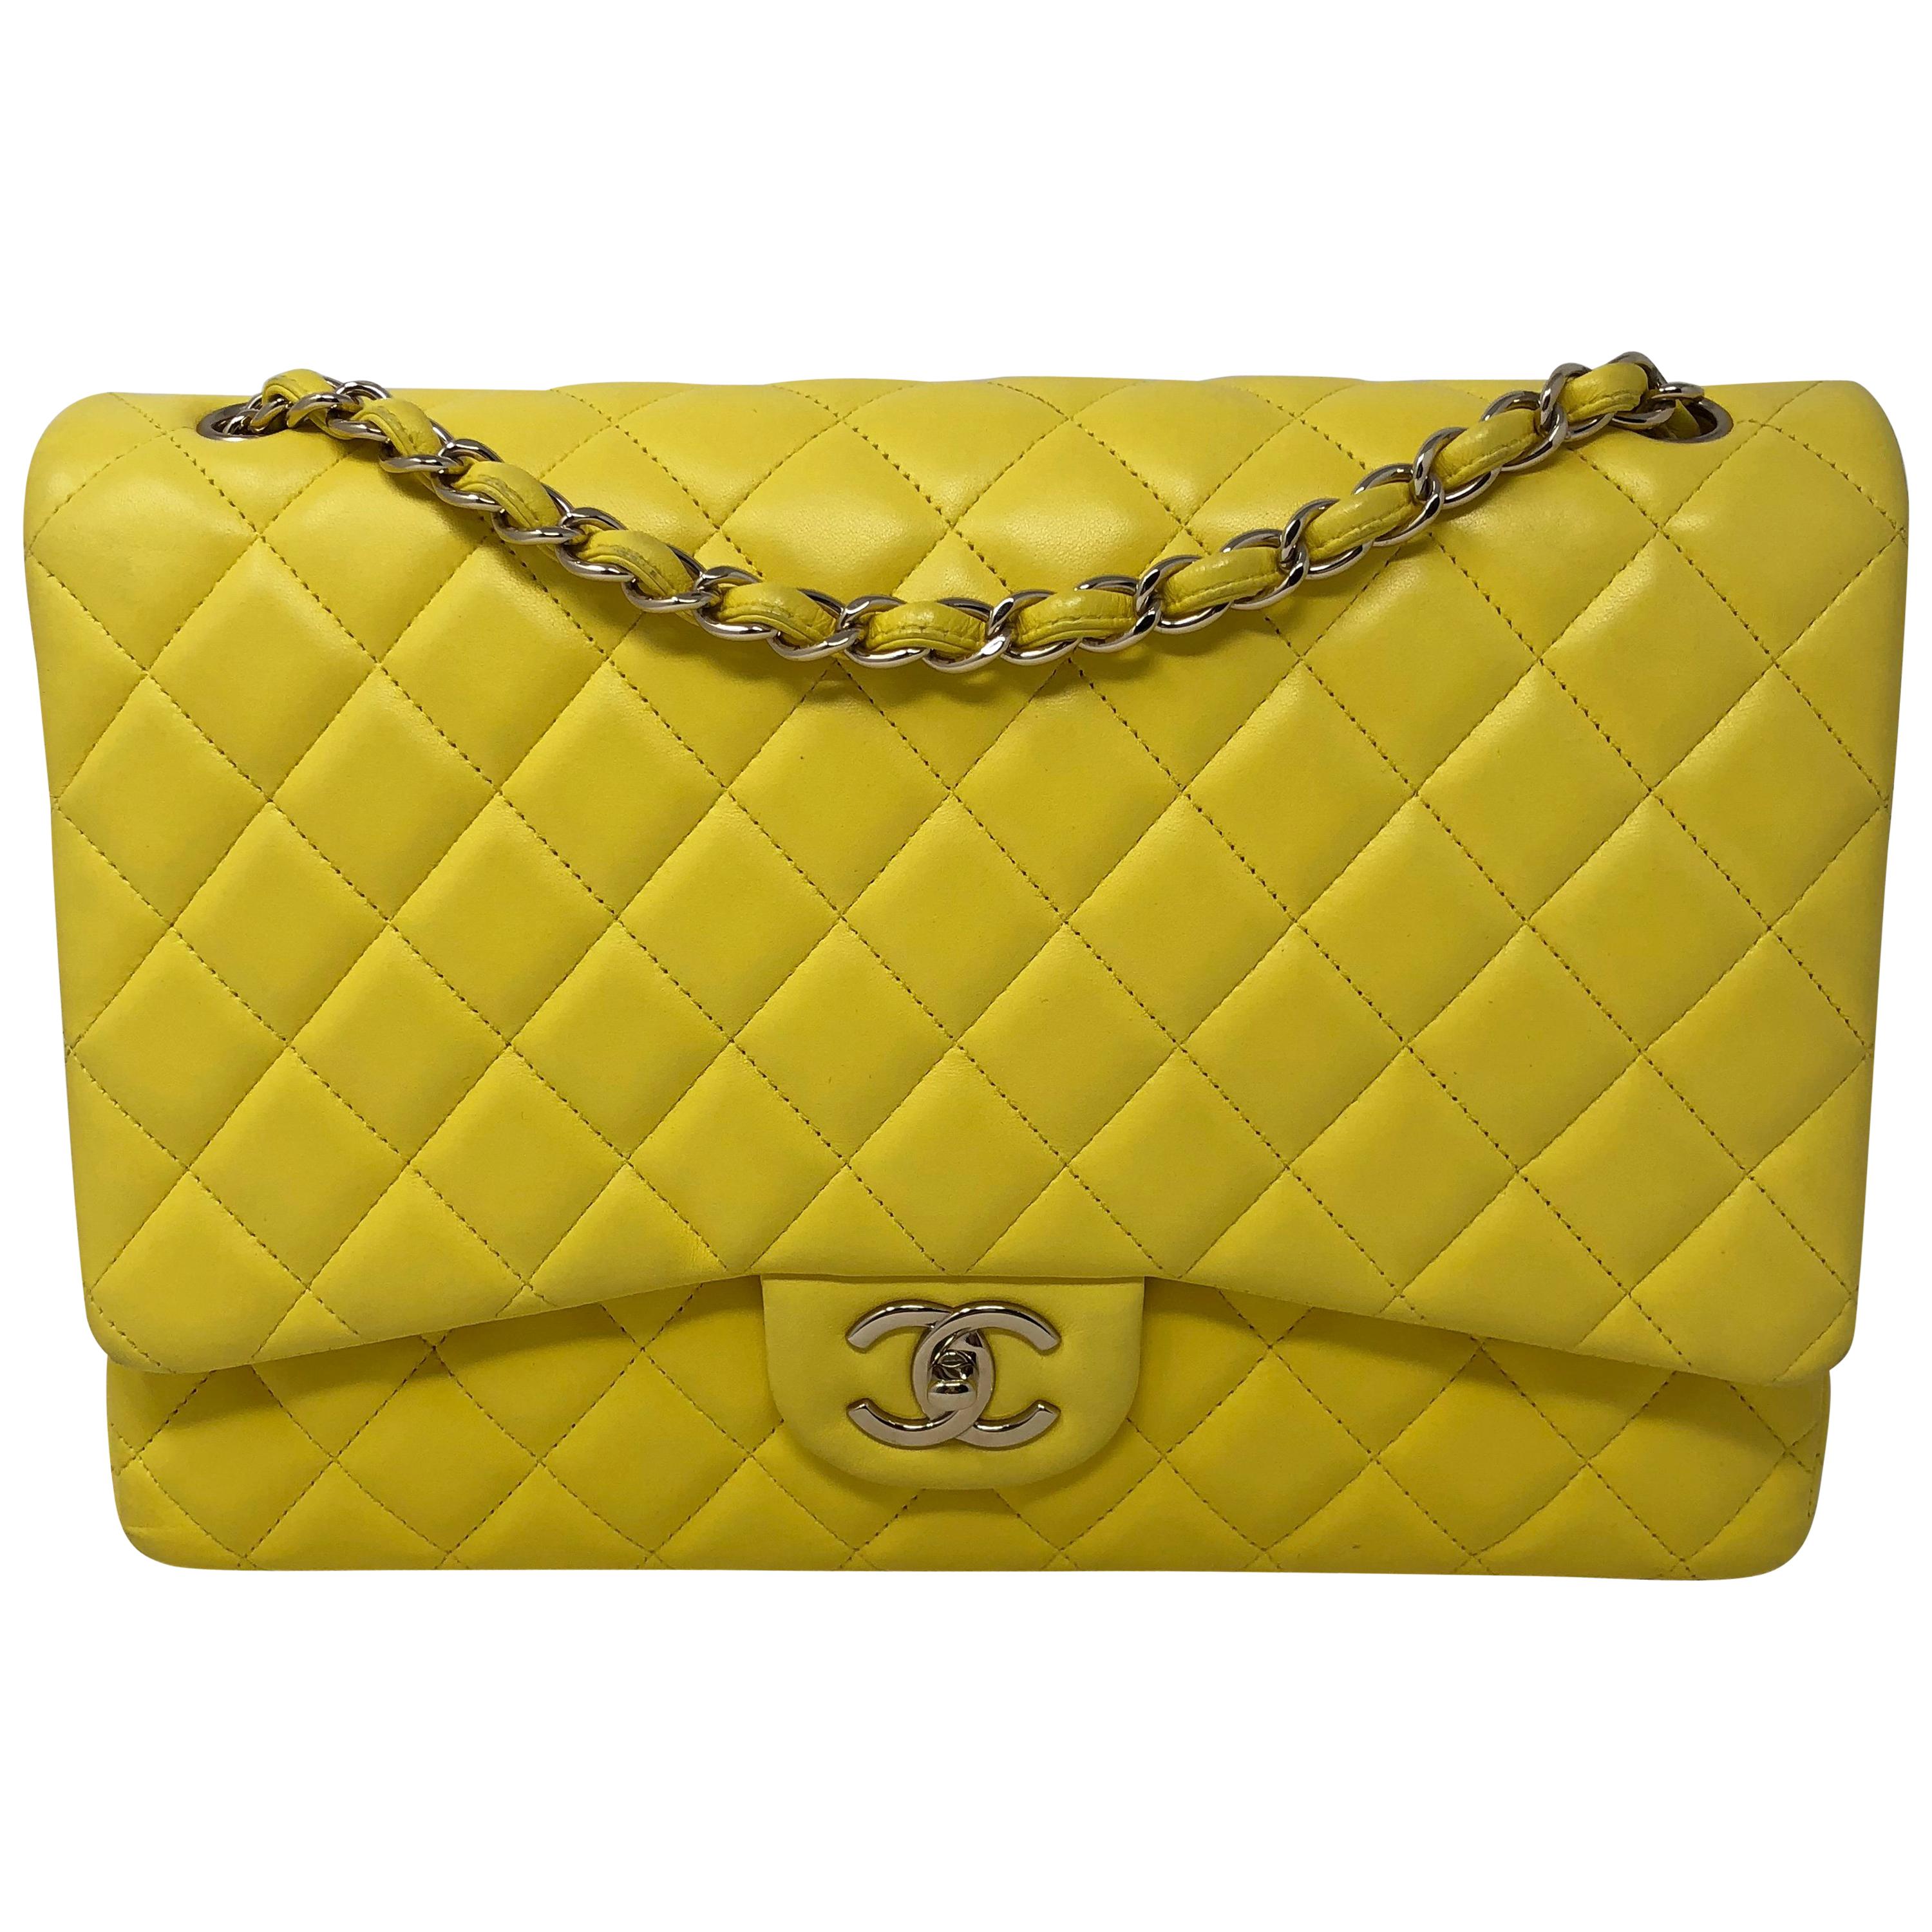 Chanel Yellow Maxi Double Flap Bag